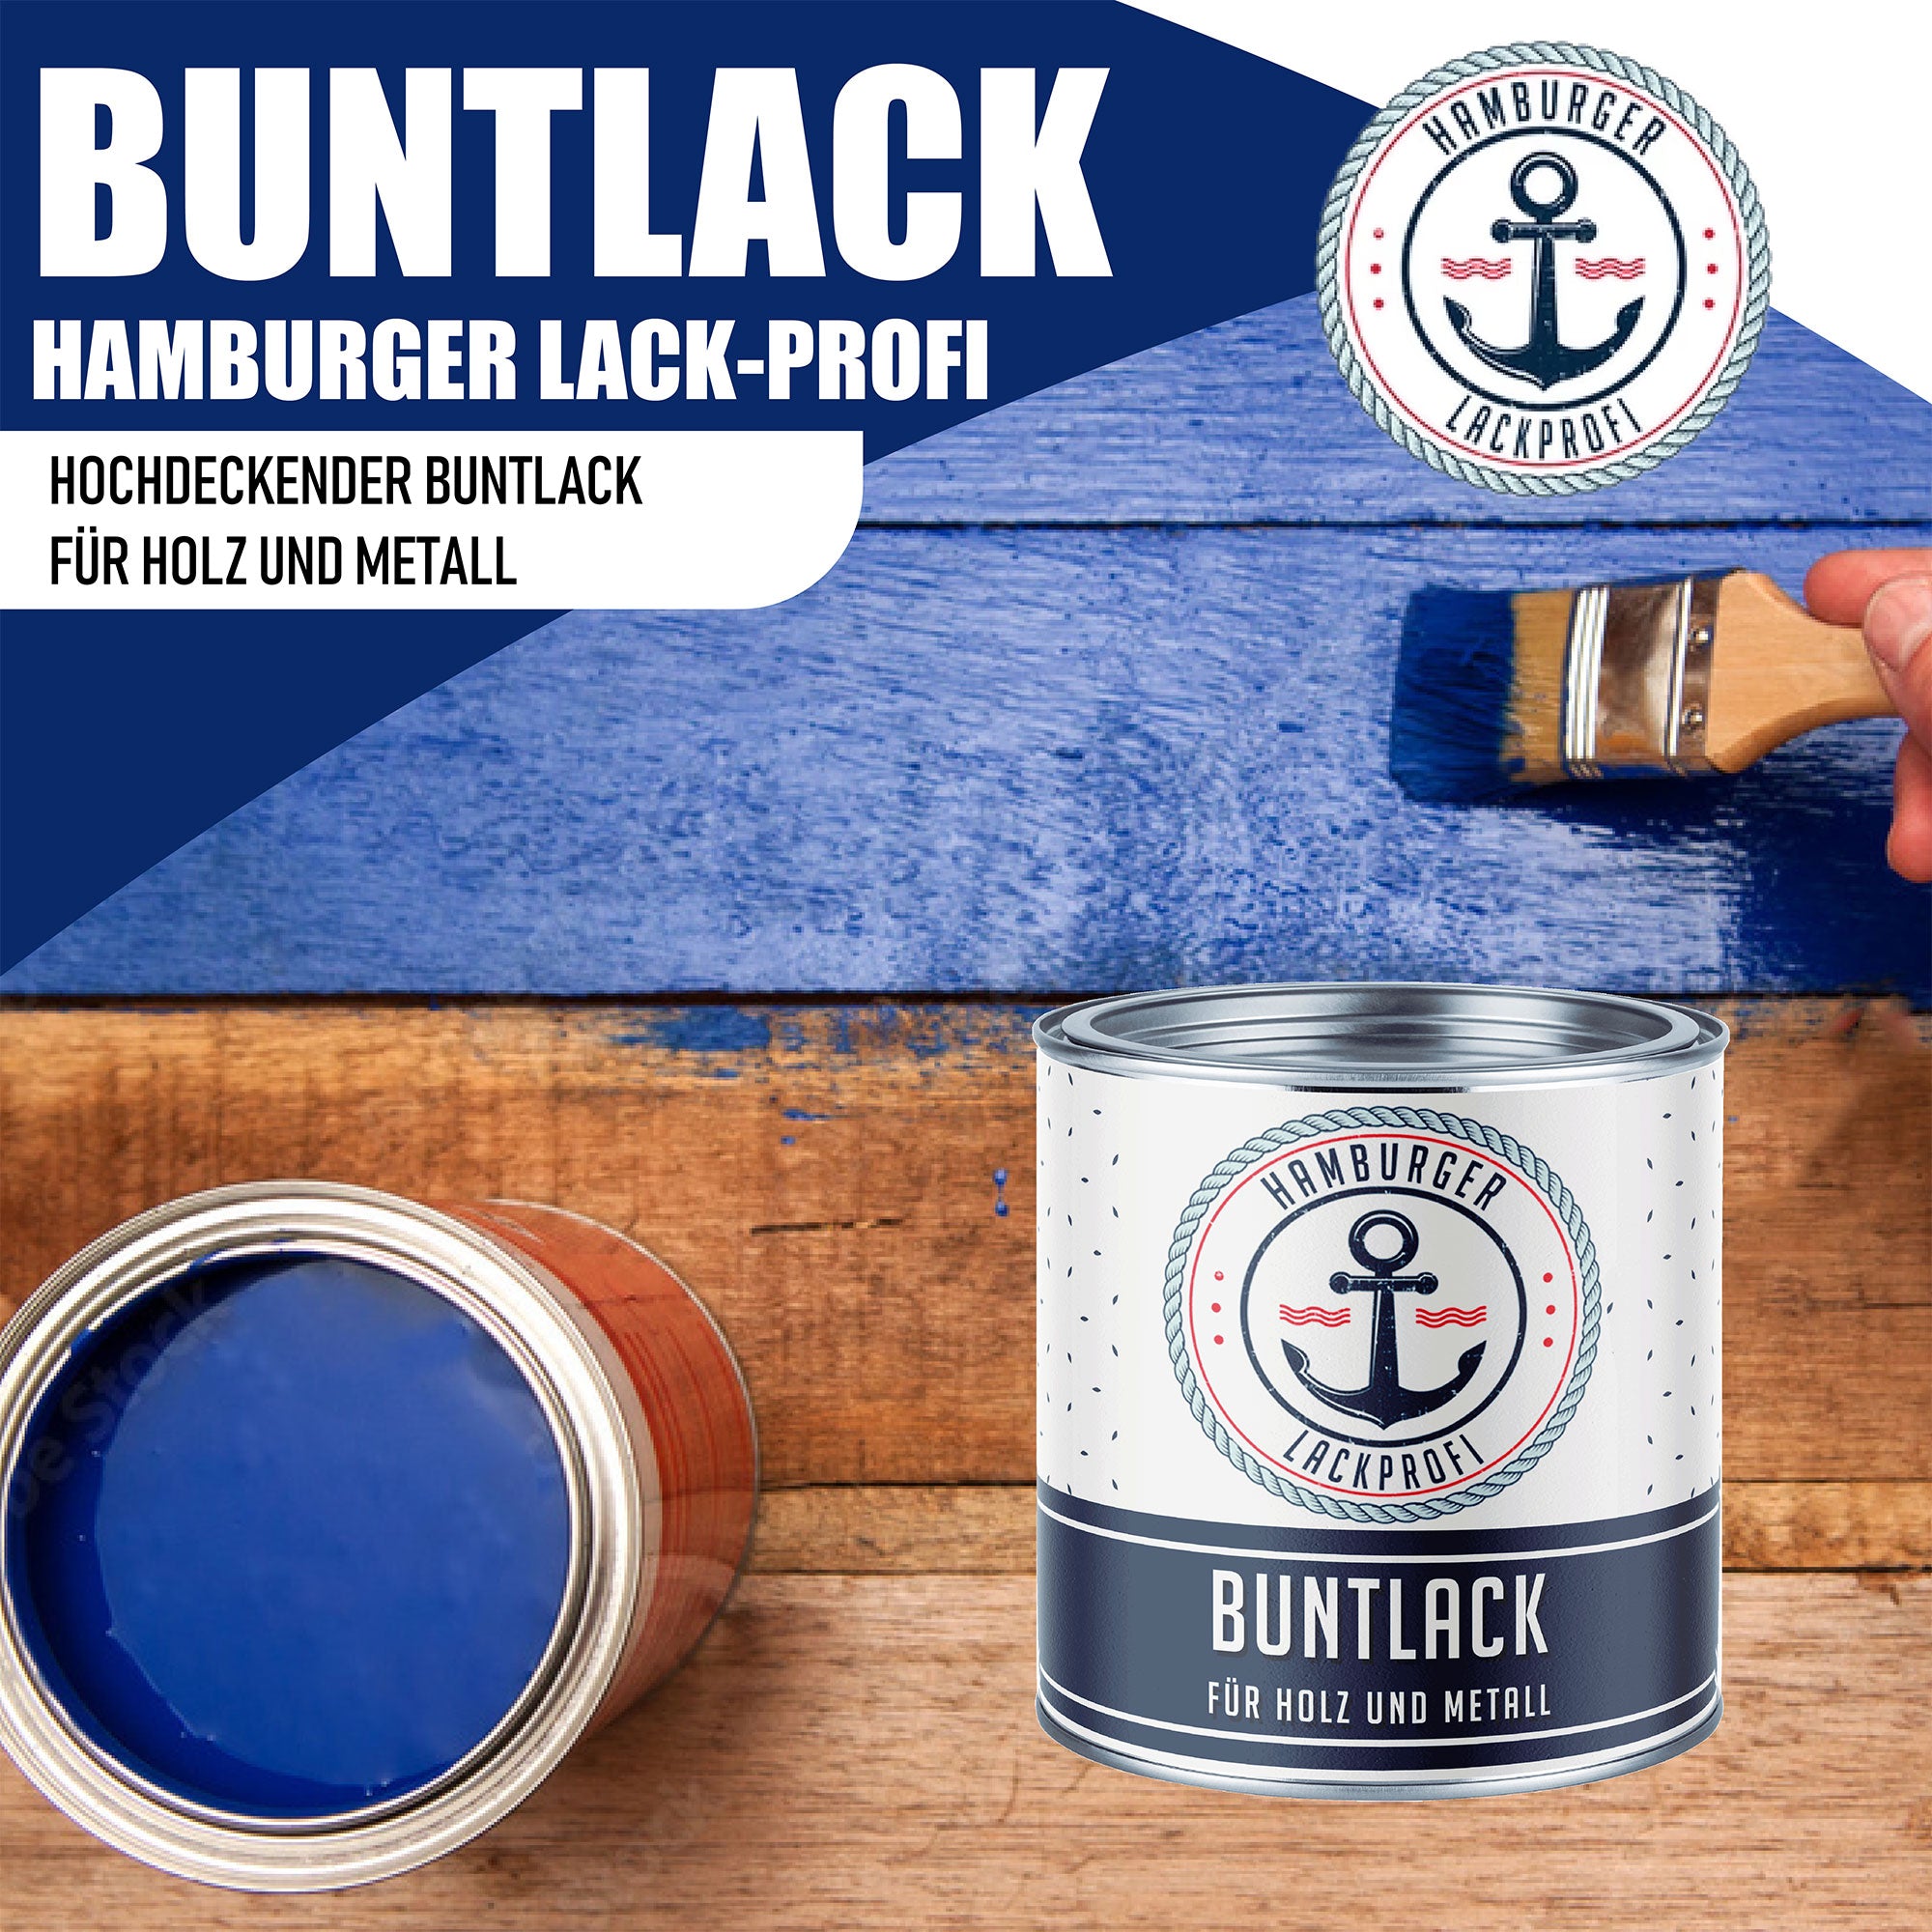 Hamburger Lack-Profi Buntlack Ginstergelb RAL 1032 - Robuster Kunstharzlack